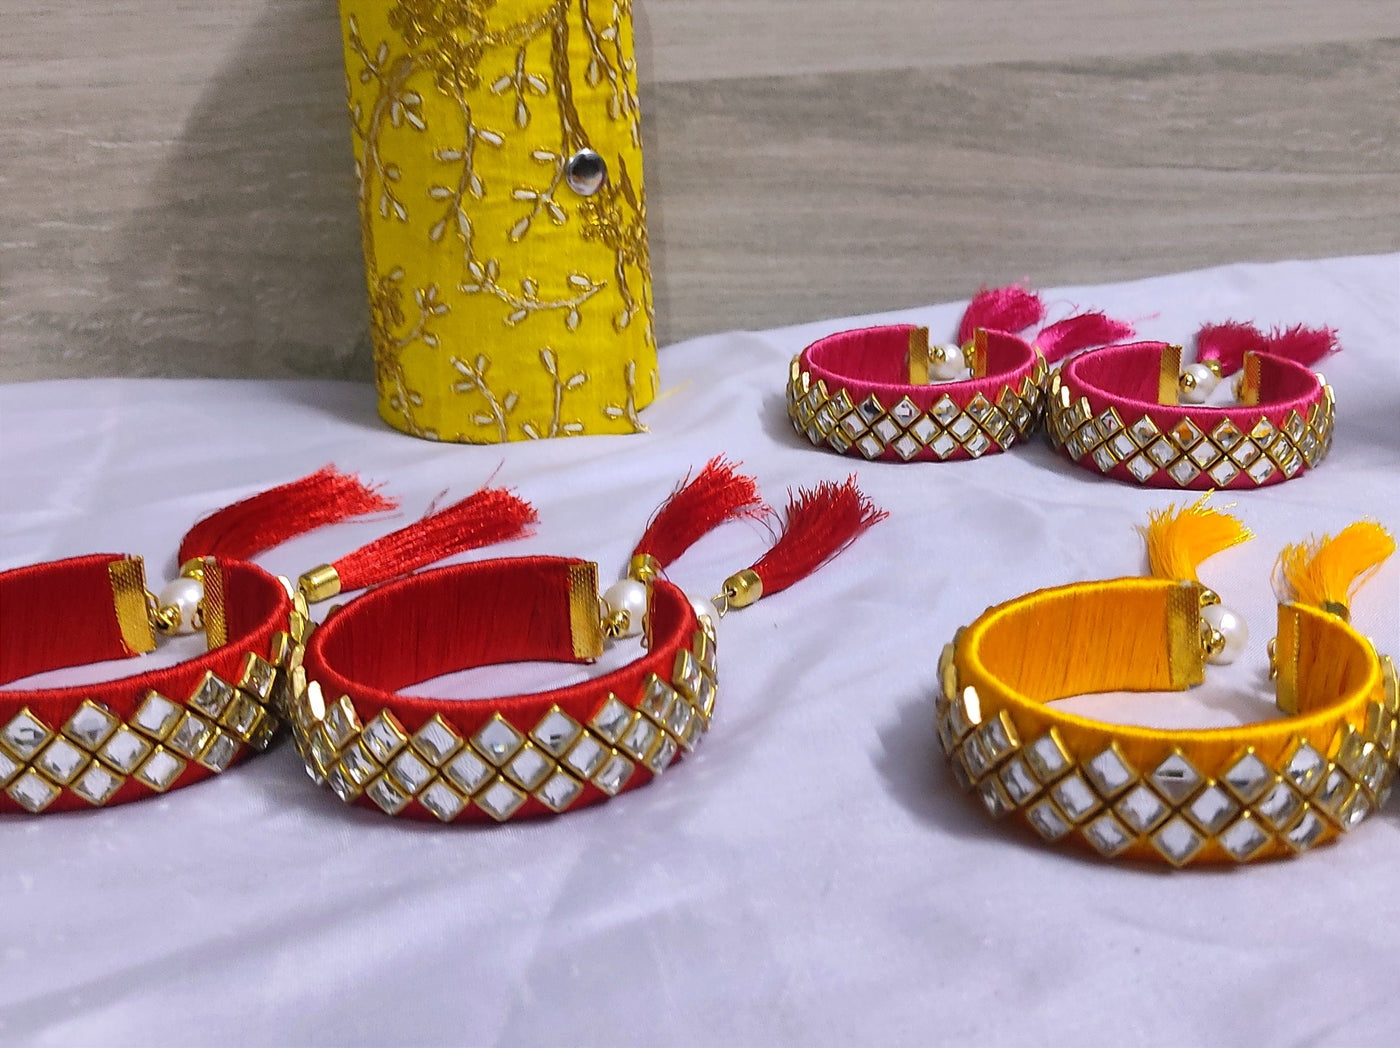 Lamansh kundan thread bangles LAMANSH® Set of 5 Pairs Kundan Indian Thread Bangles in Assorted colors / Silk chudi with hanging tassels / 1 inch Broad Kada Bangle For Festival Wear / Bangles for wedding functions & giveaways